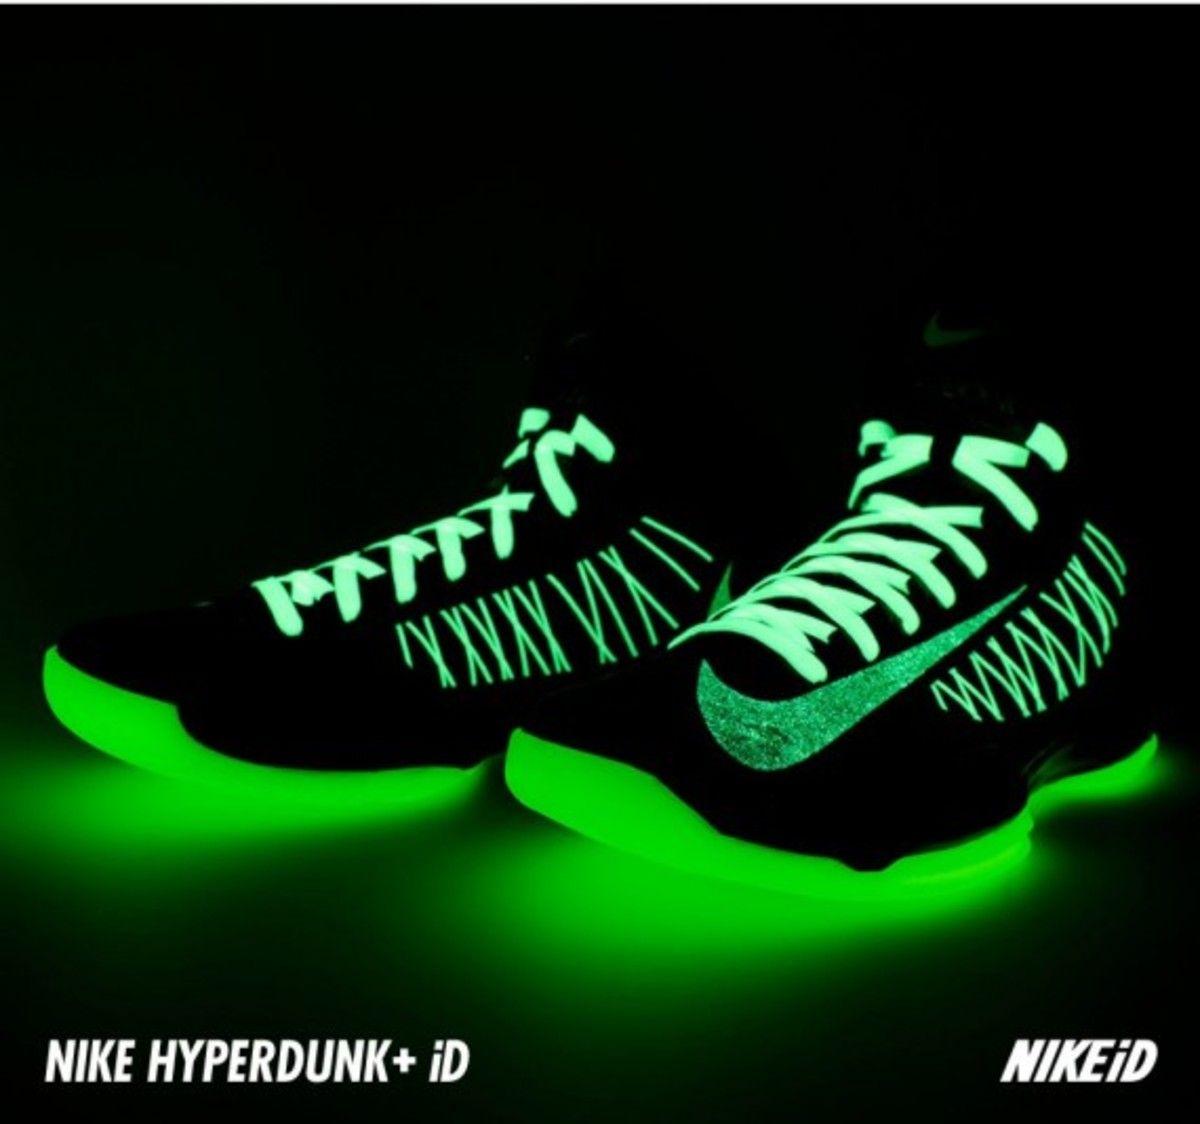 Glow in the Dark Nike Logo - NIKEiD Hyperdunk+ iD in the Dark Design Option